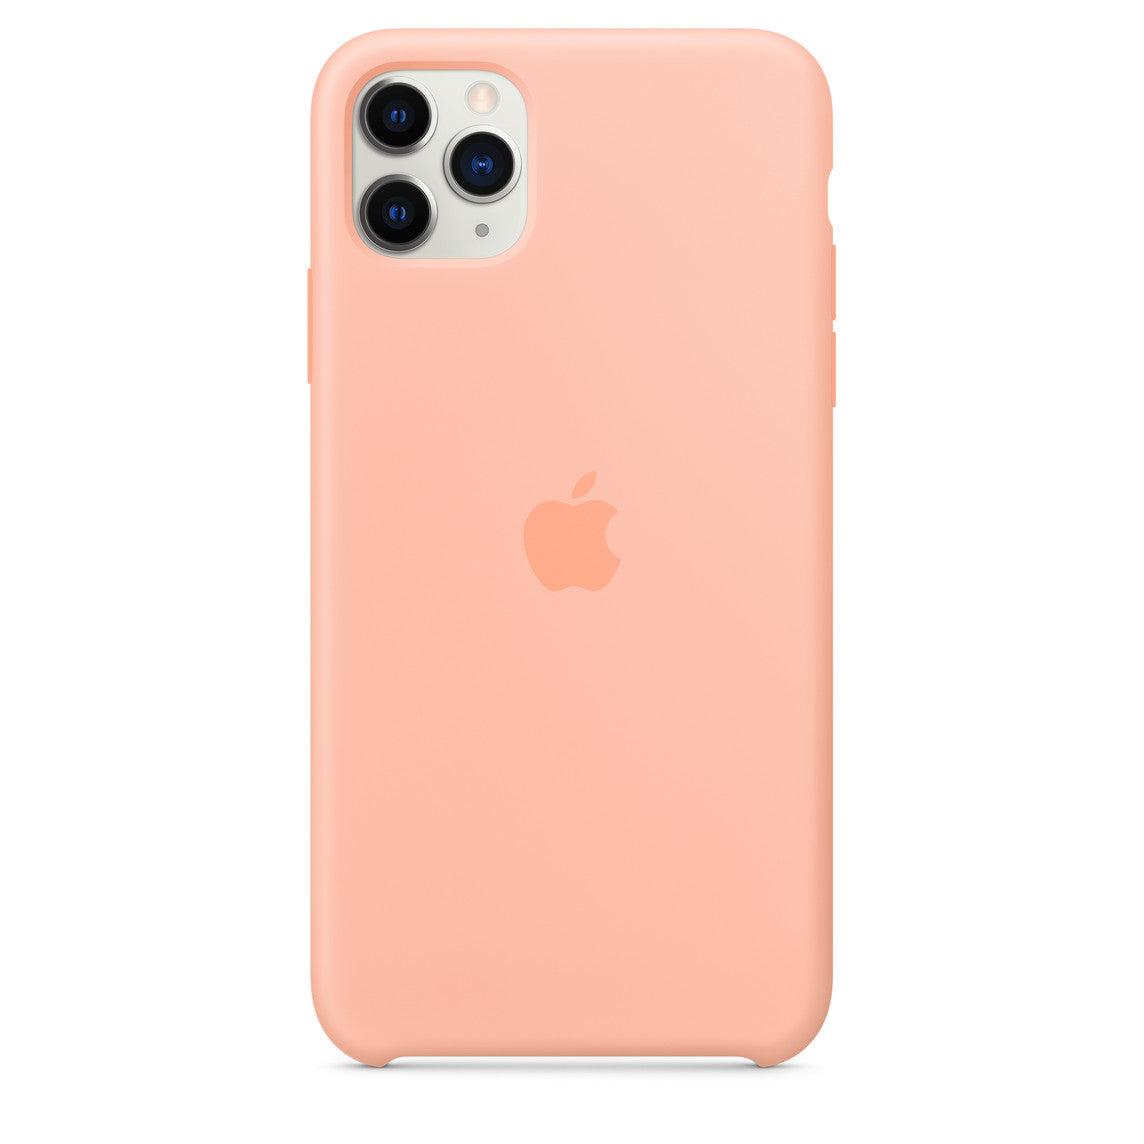 Apple iPhone 11 Pro Max 512GB Silber Fair Ohne Vertrag mit Apple iPhone 11 Pro Max Silikonhülle – Grapefruit